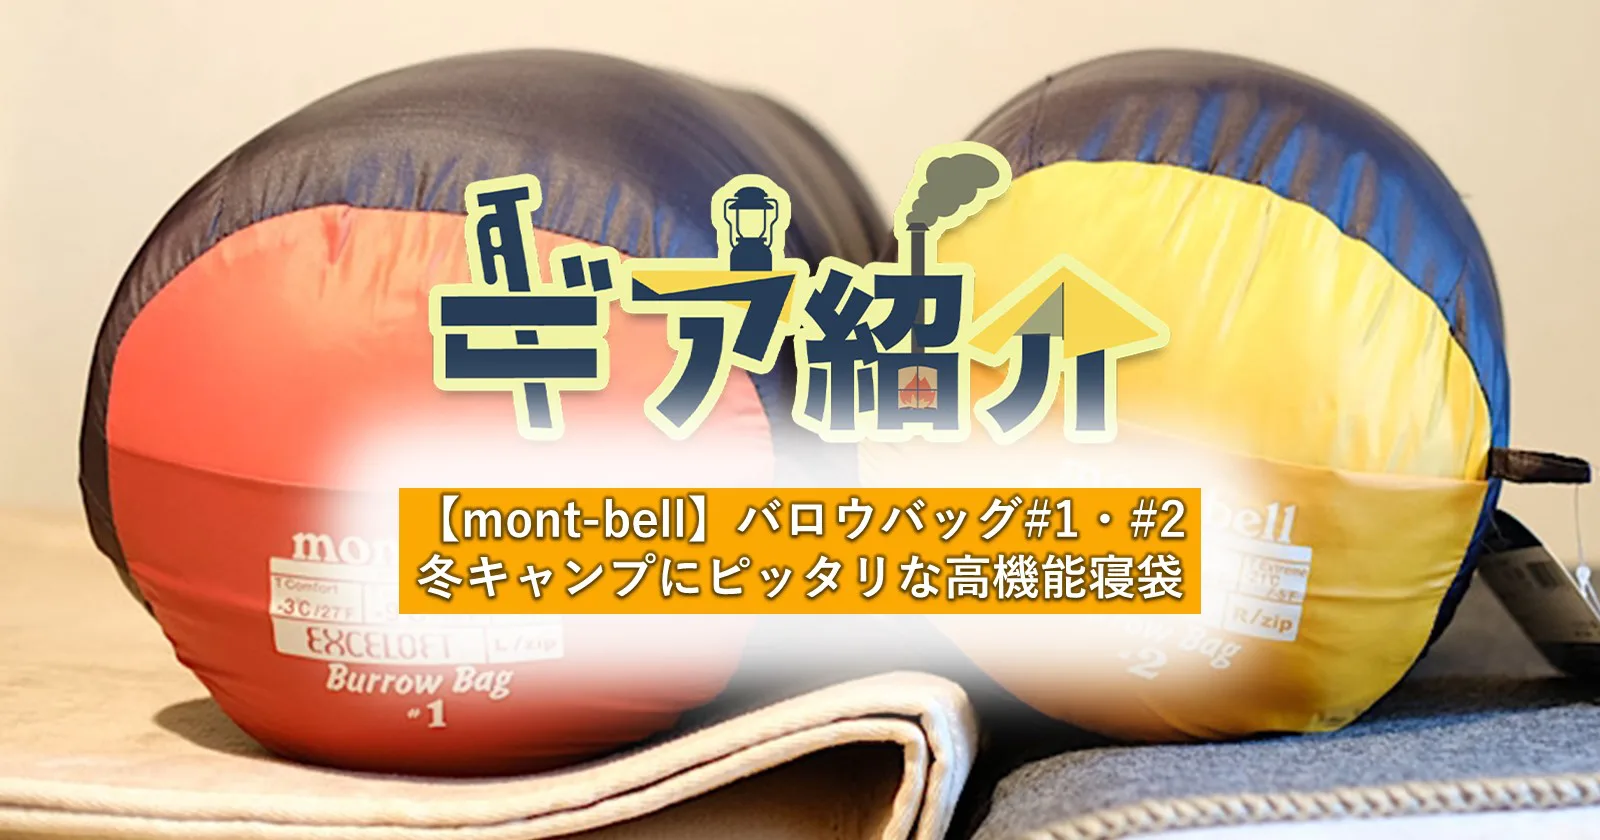 mont-bell モンベル バロウバッグ R #1 寝袋 - 寝袋/寝具